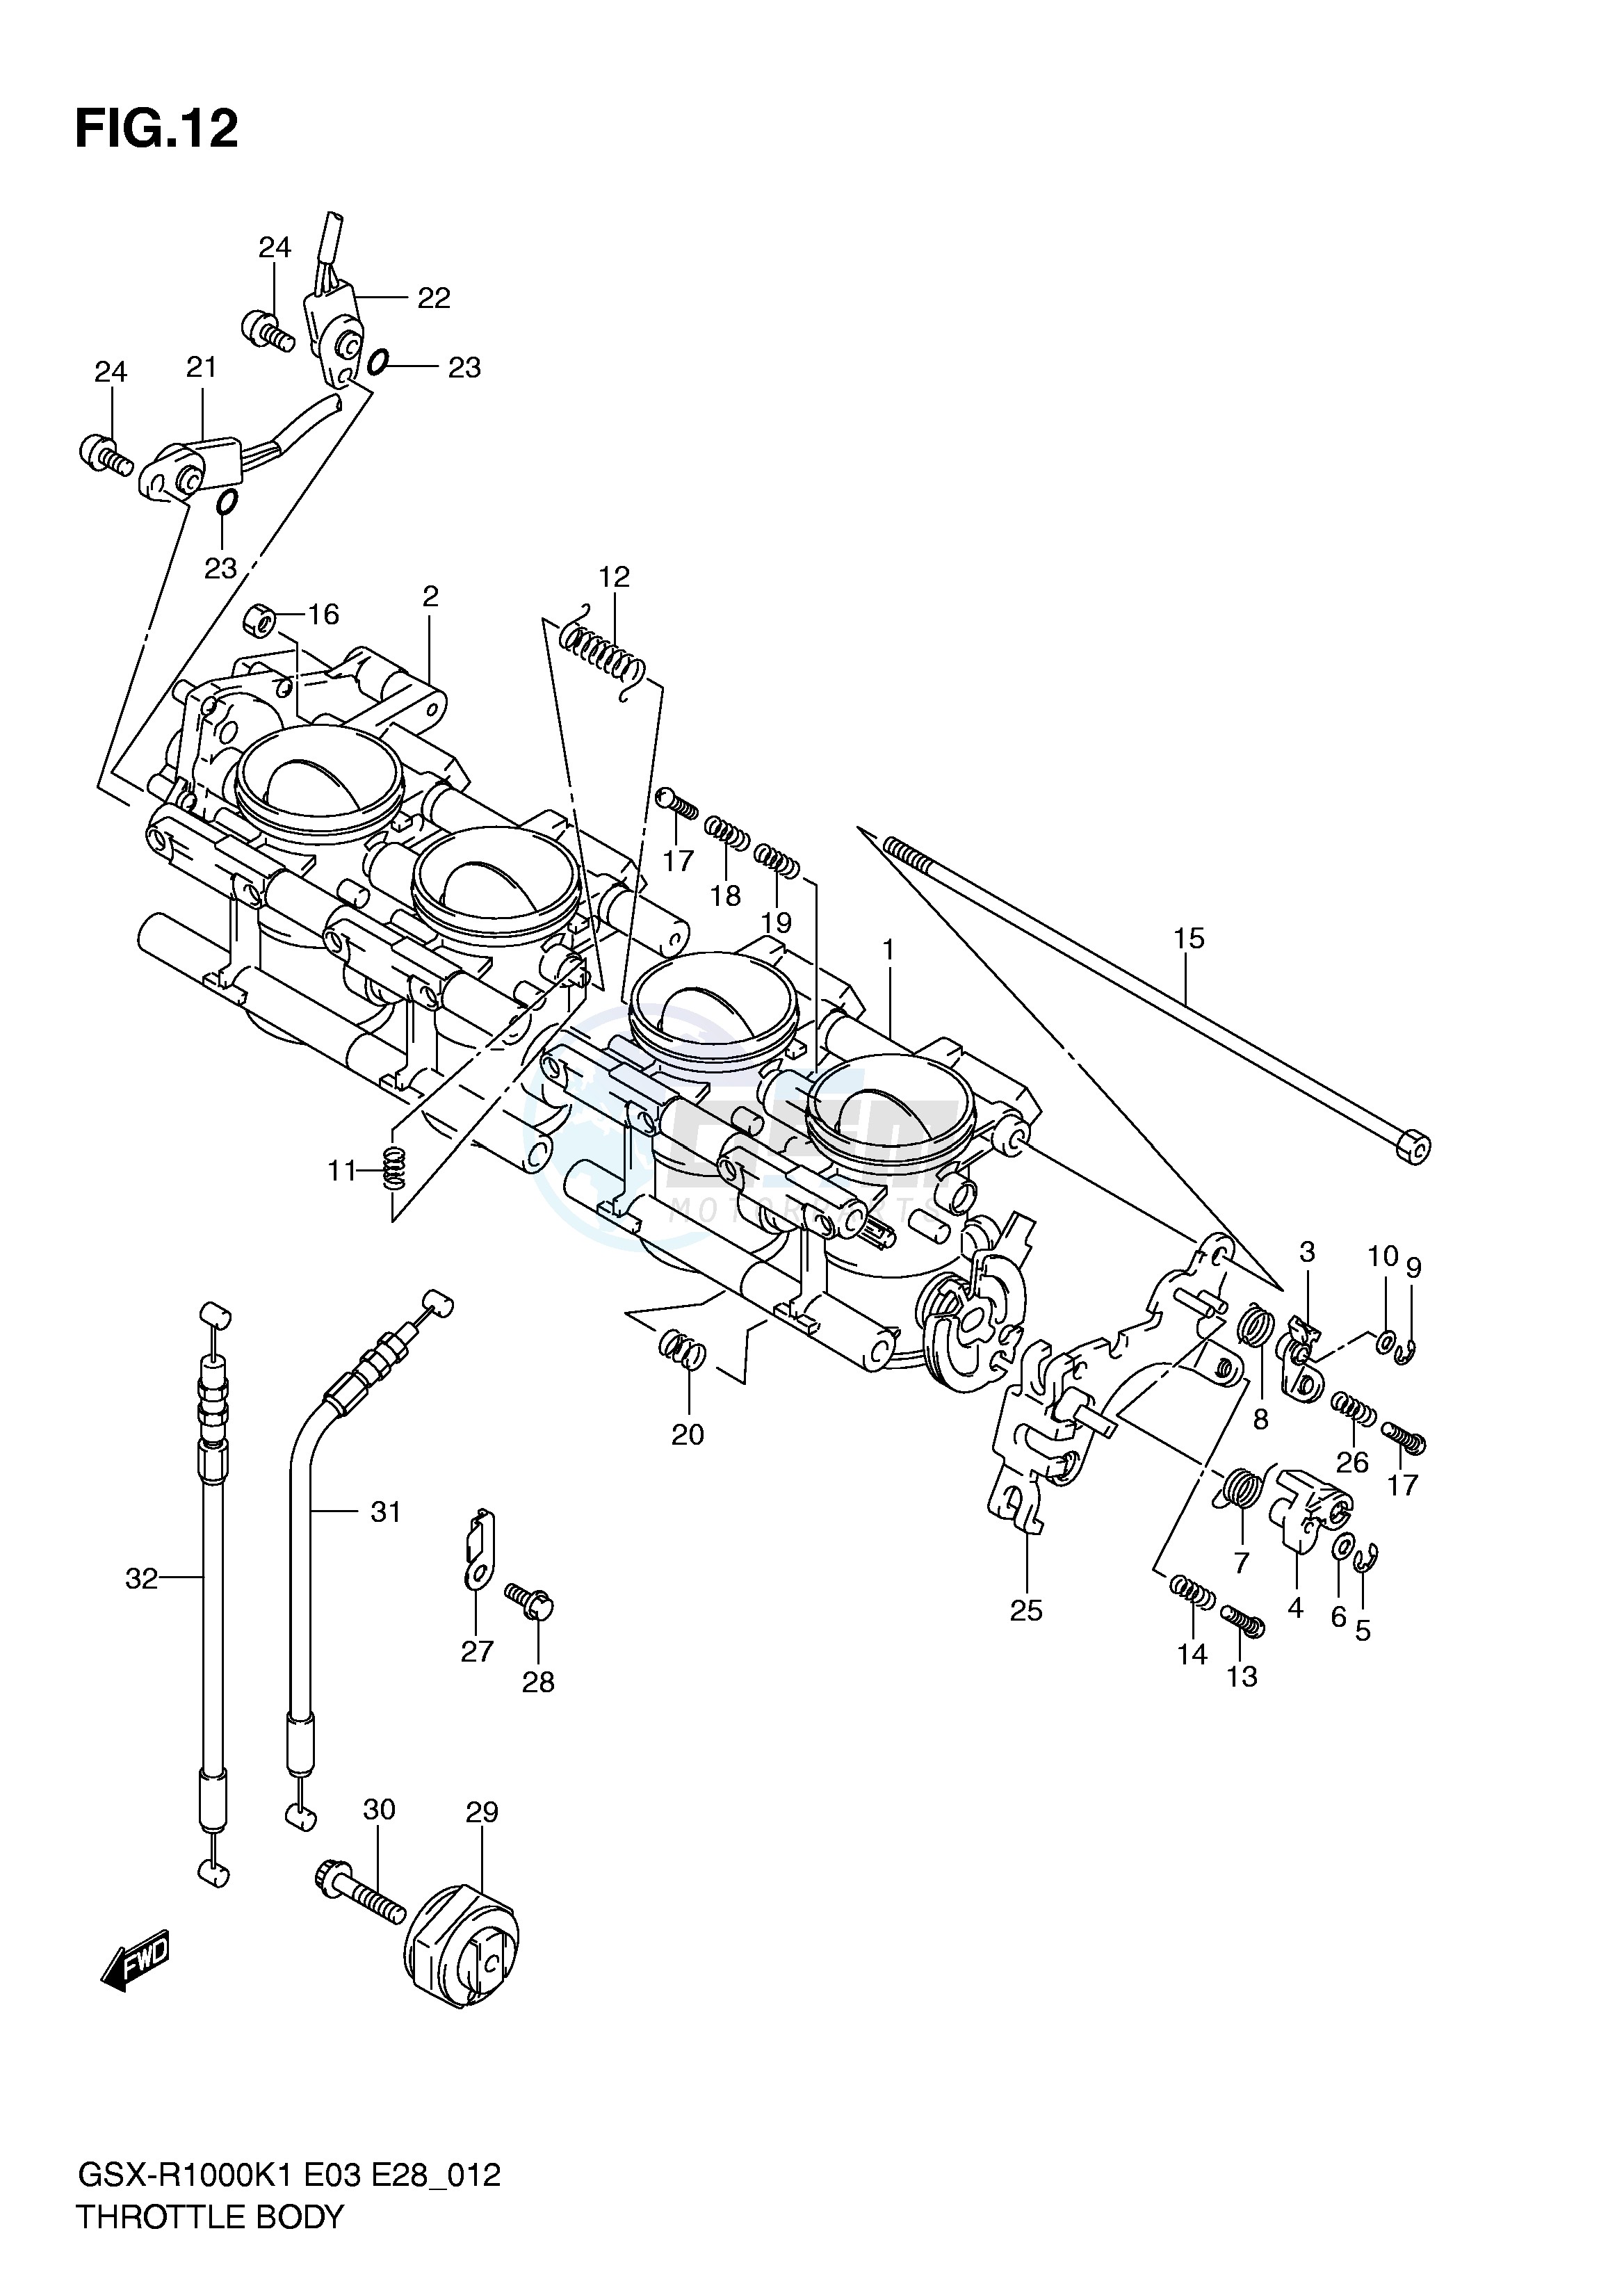 THROTTLE BODY (GSX-R1000K1) blueprint